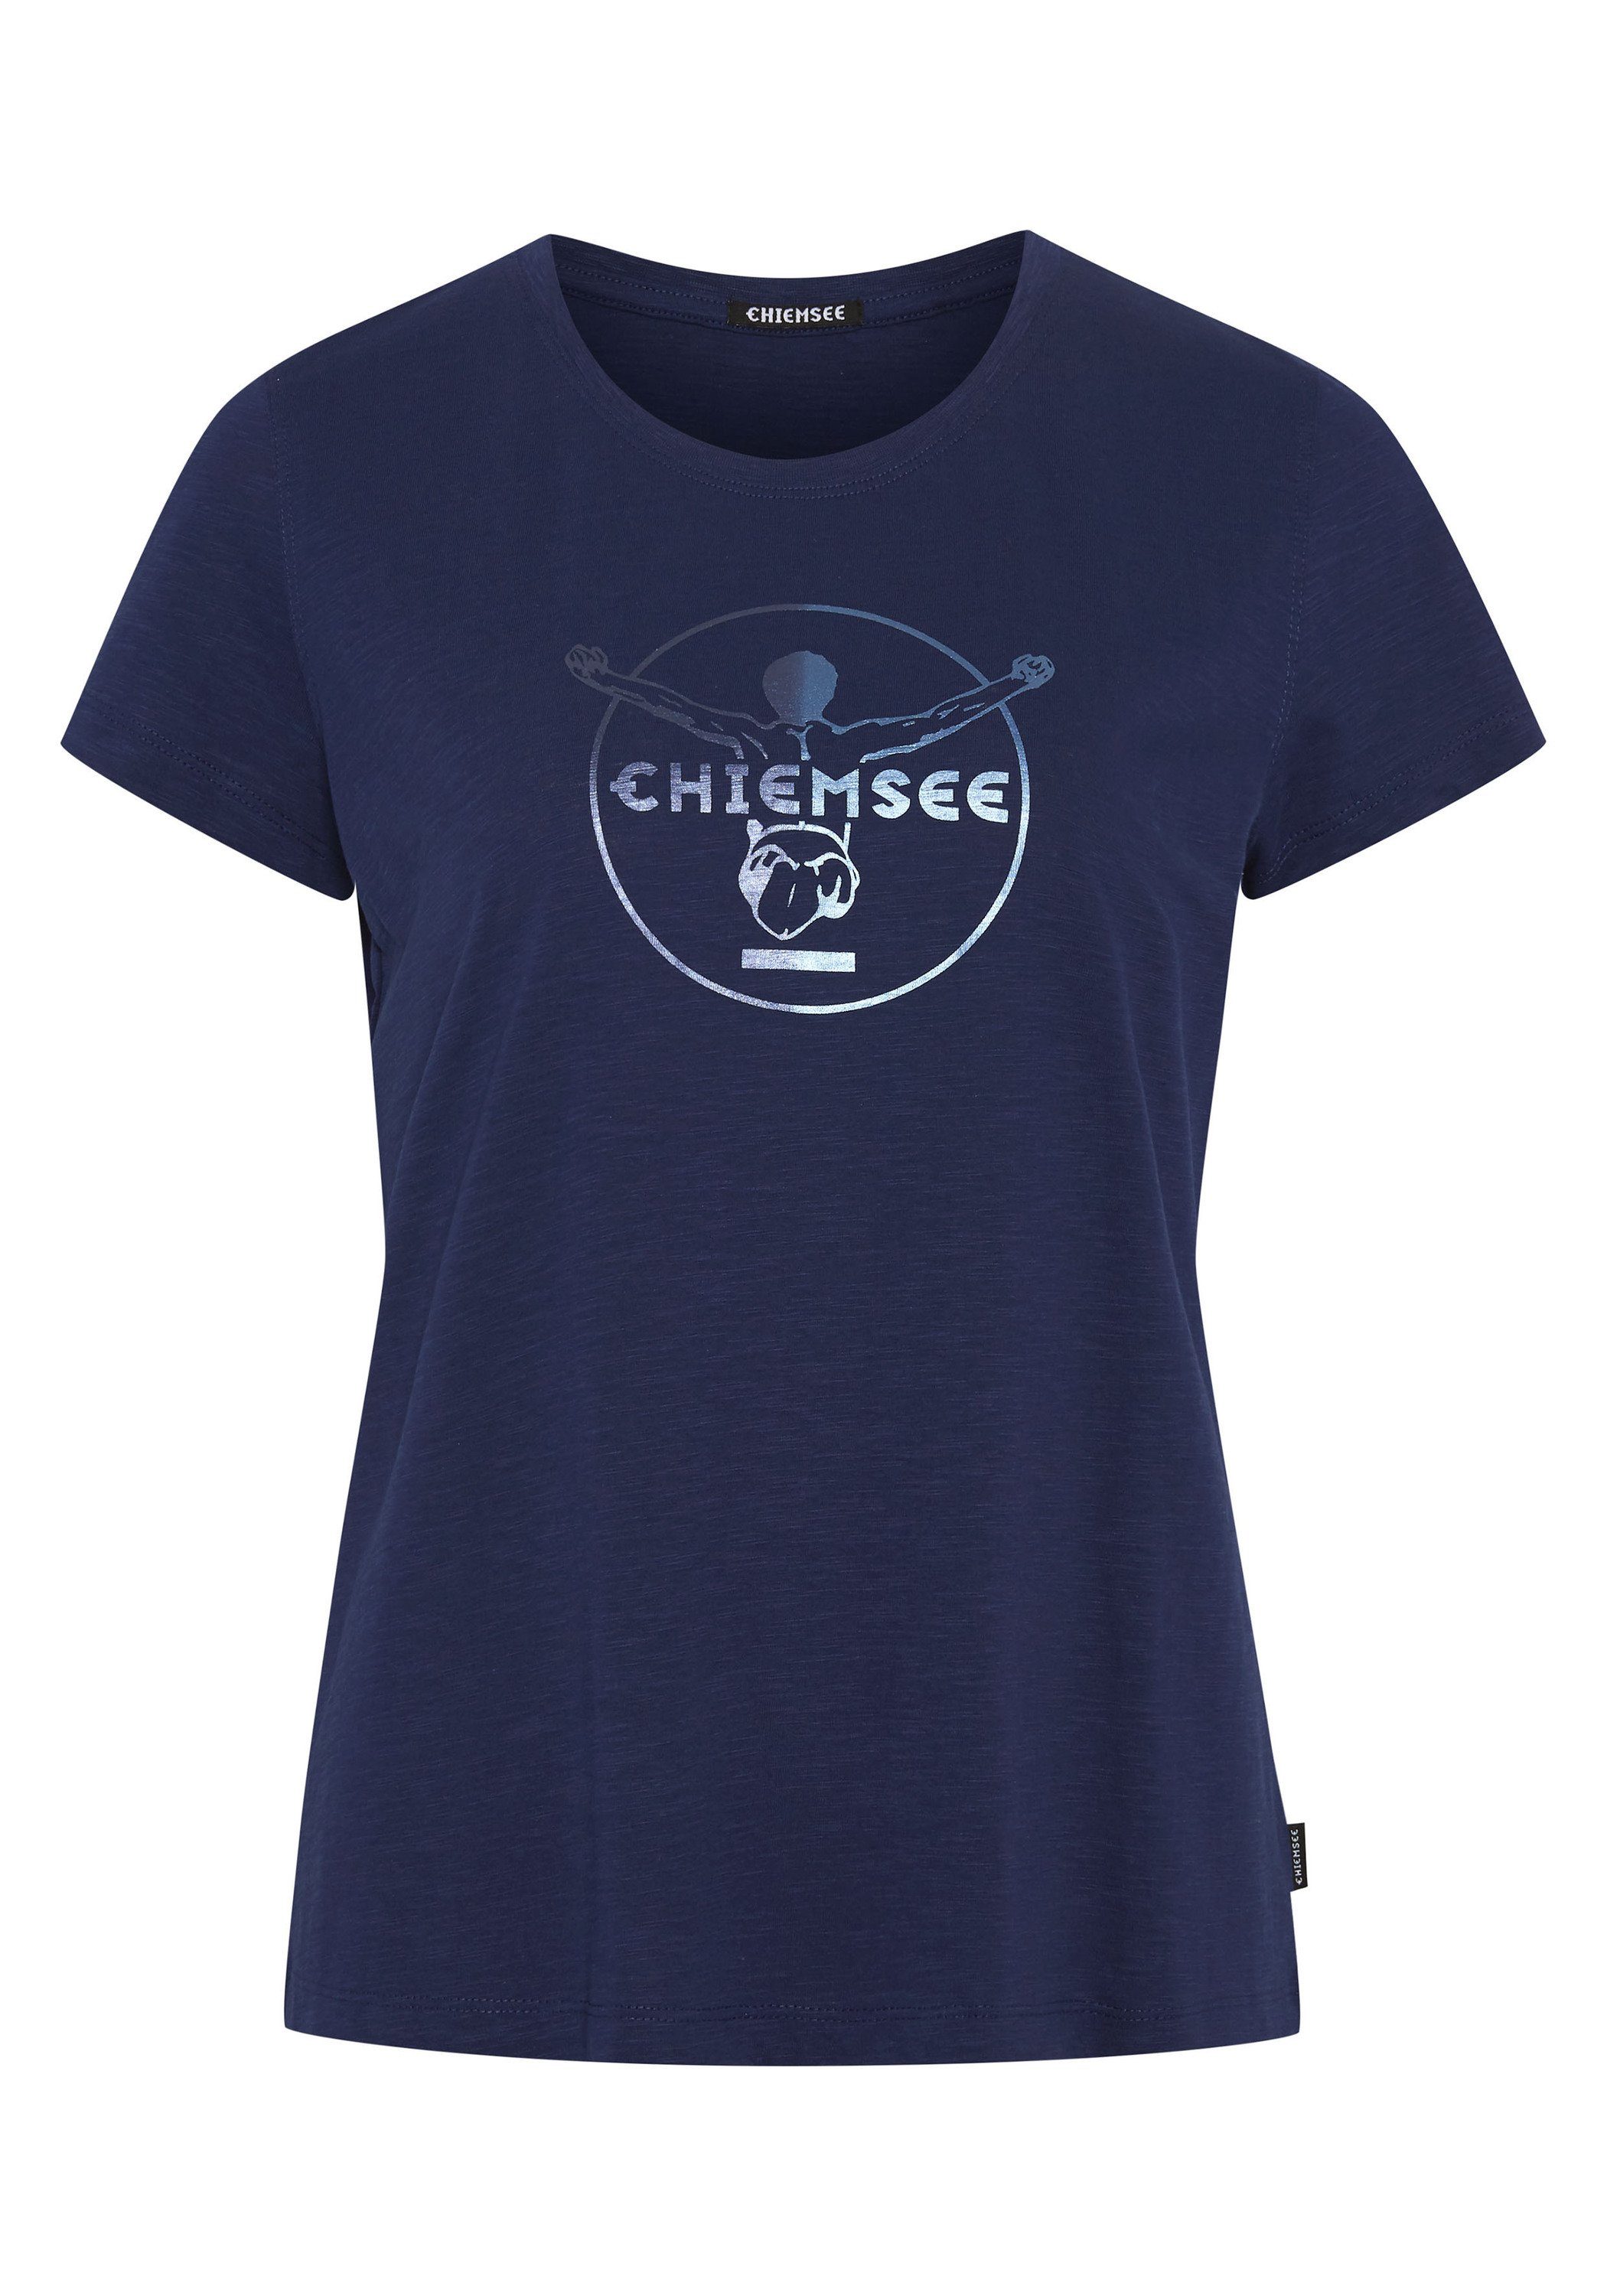 Print-Shirt T-Shirt 1 Chiemsee Medieval 19-3933 Jumper-Frontprint Blue mit